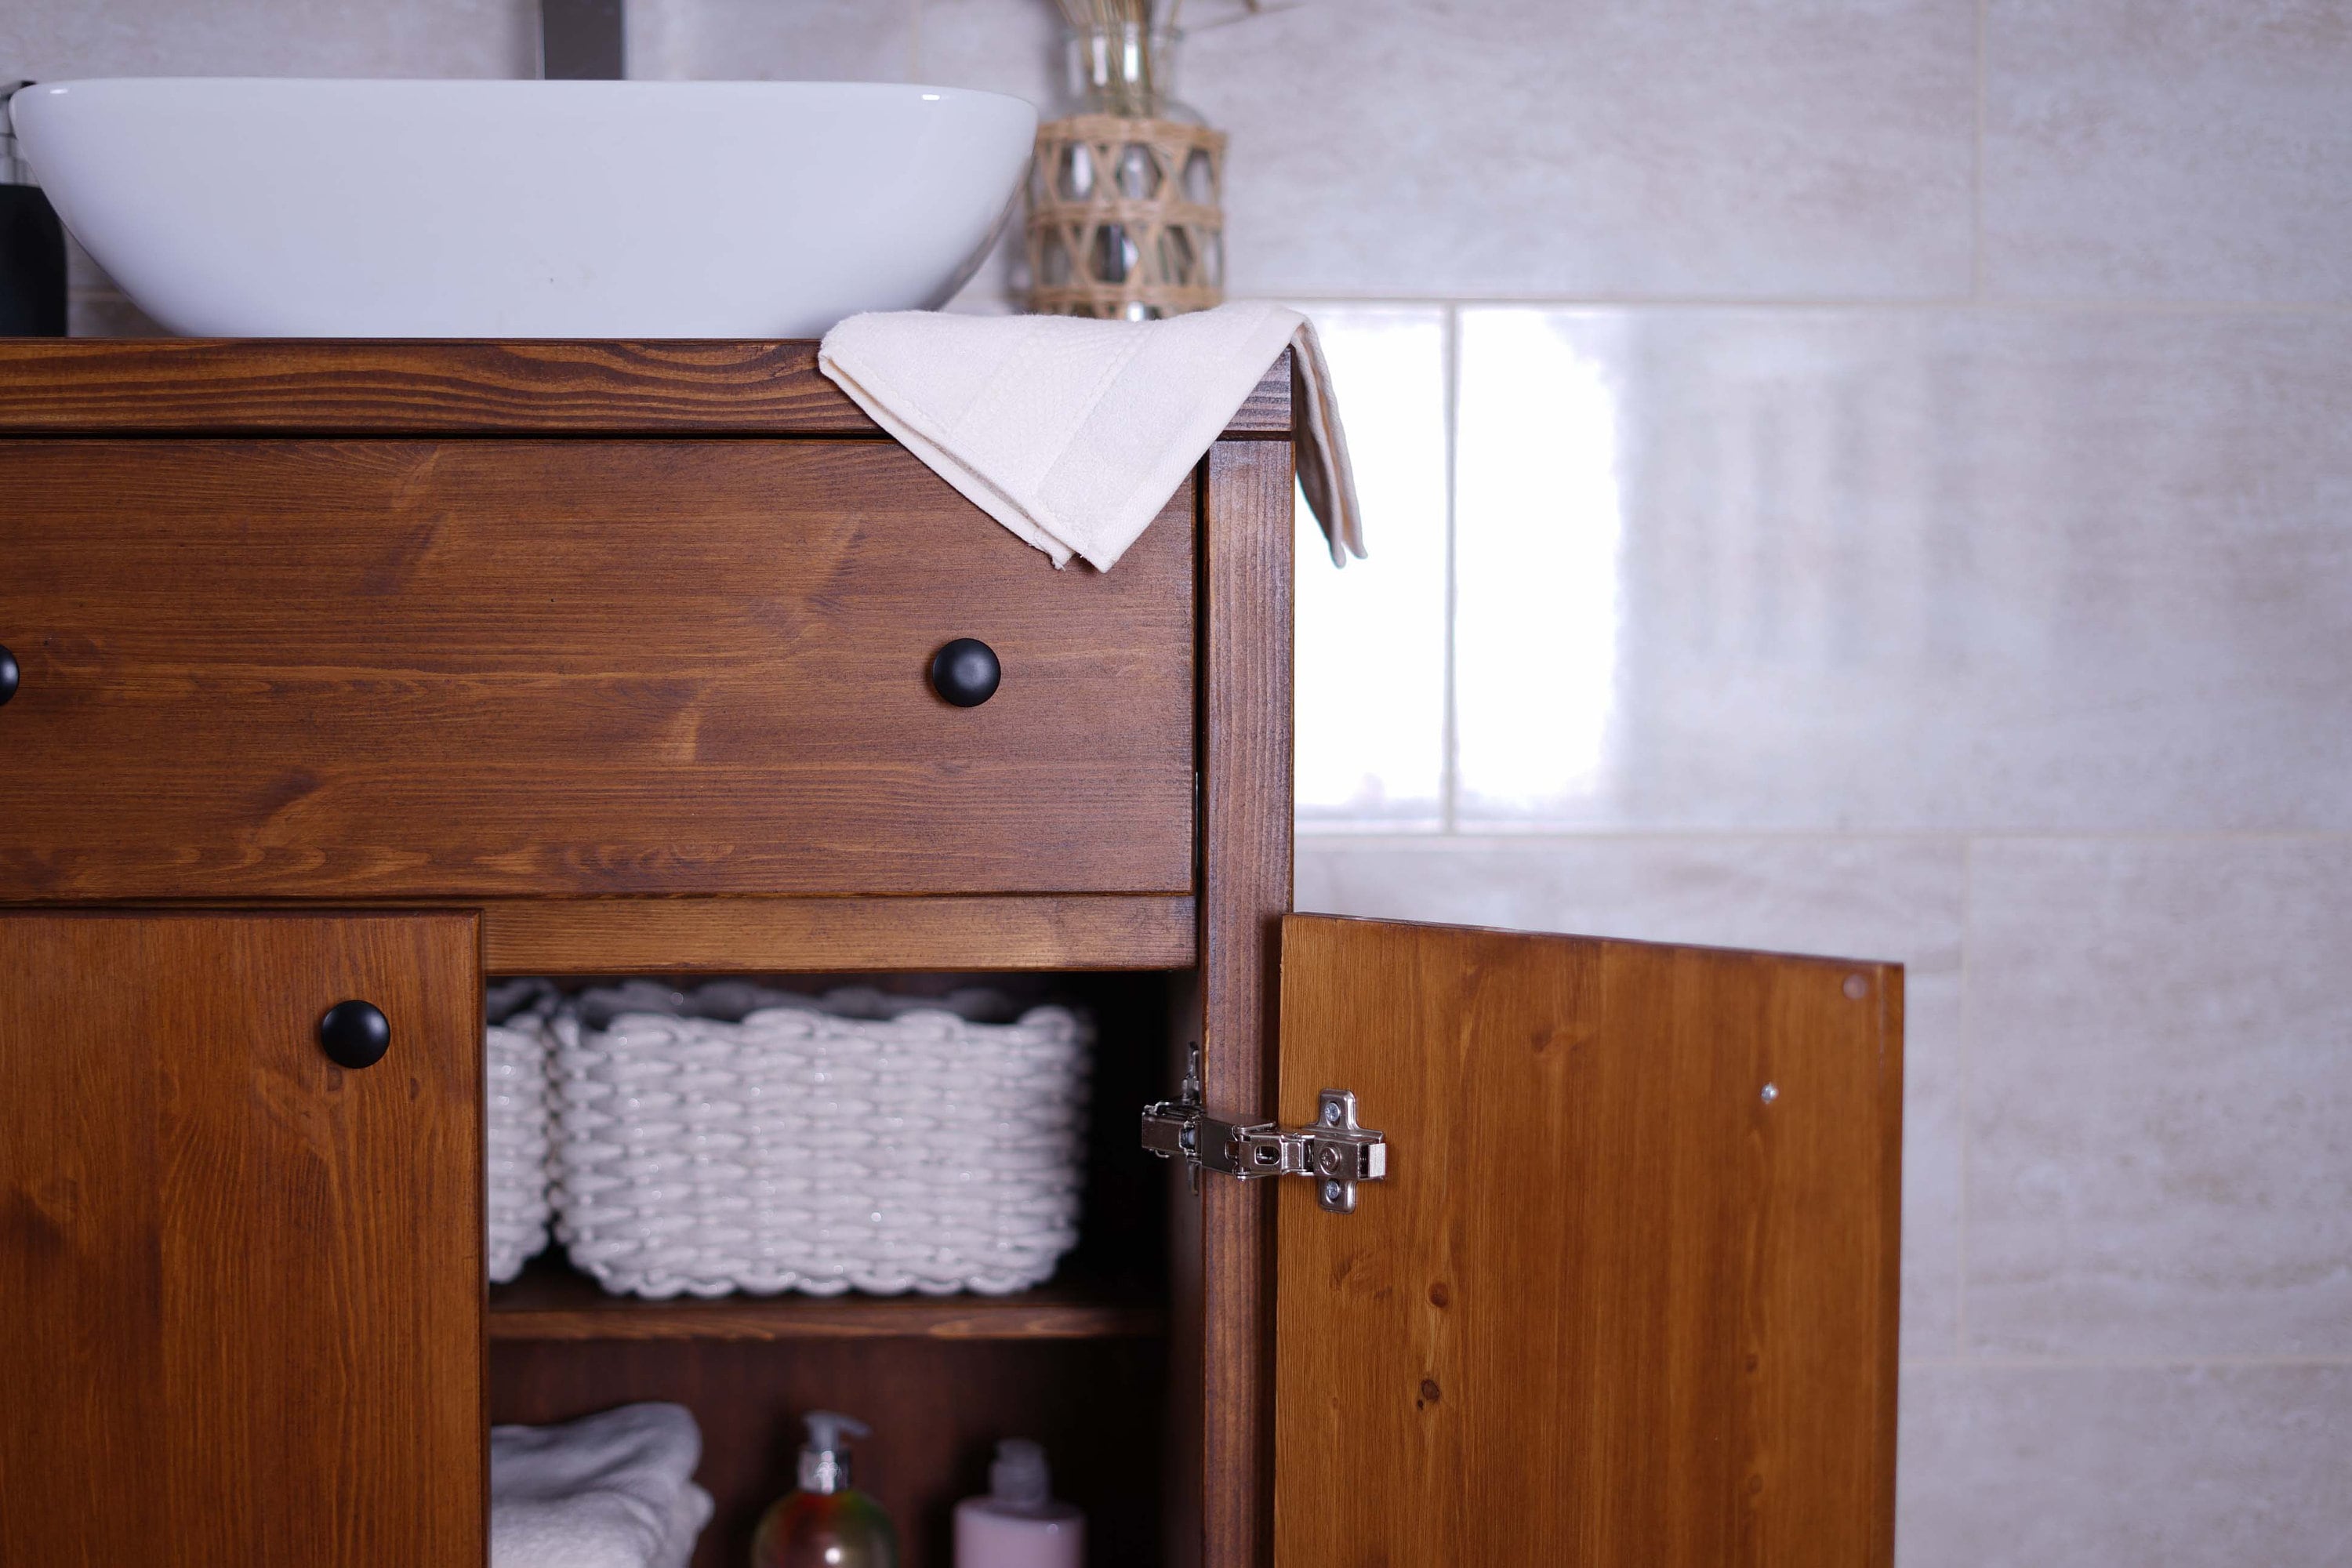 Sarah Storage Cabinet - Espresso  Beautiful bathroom furniture